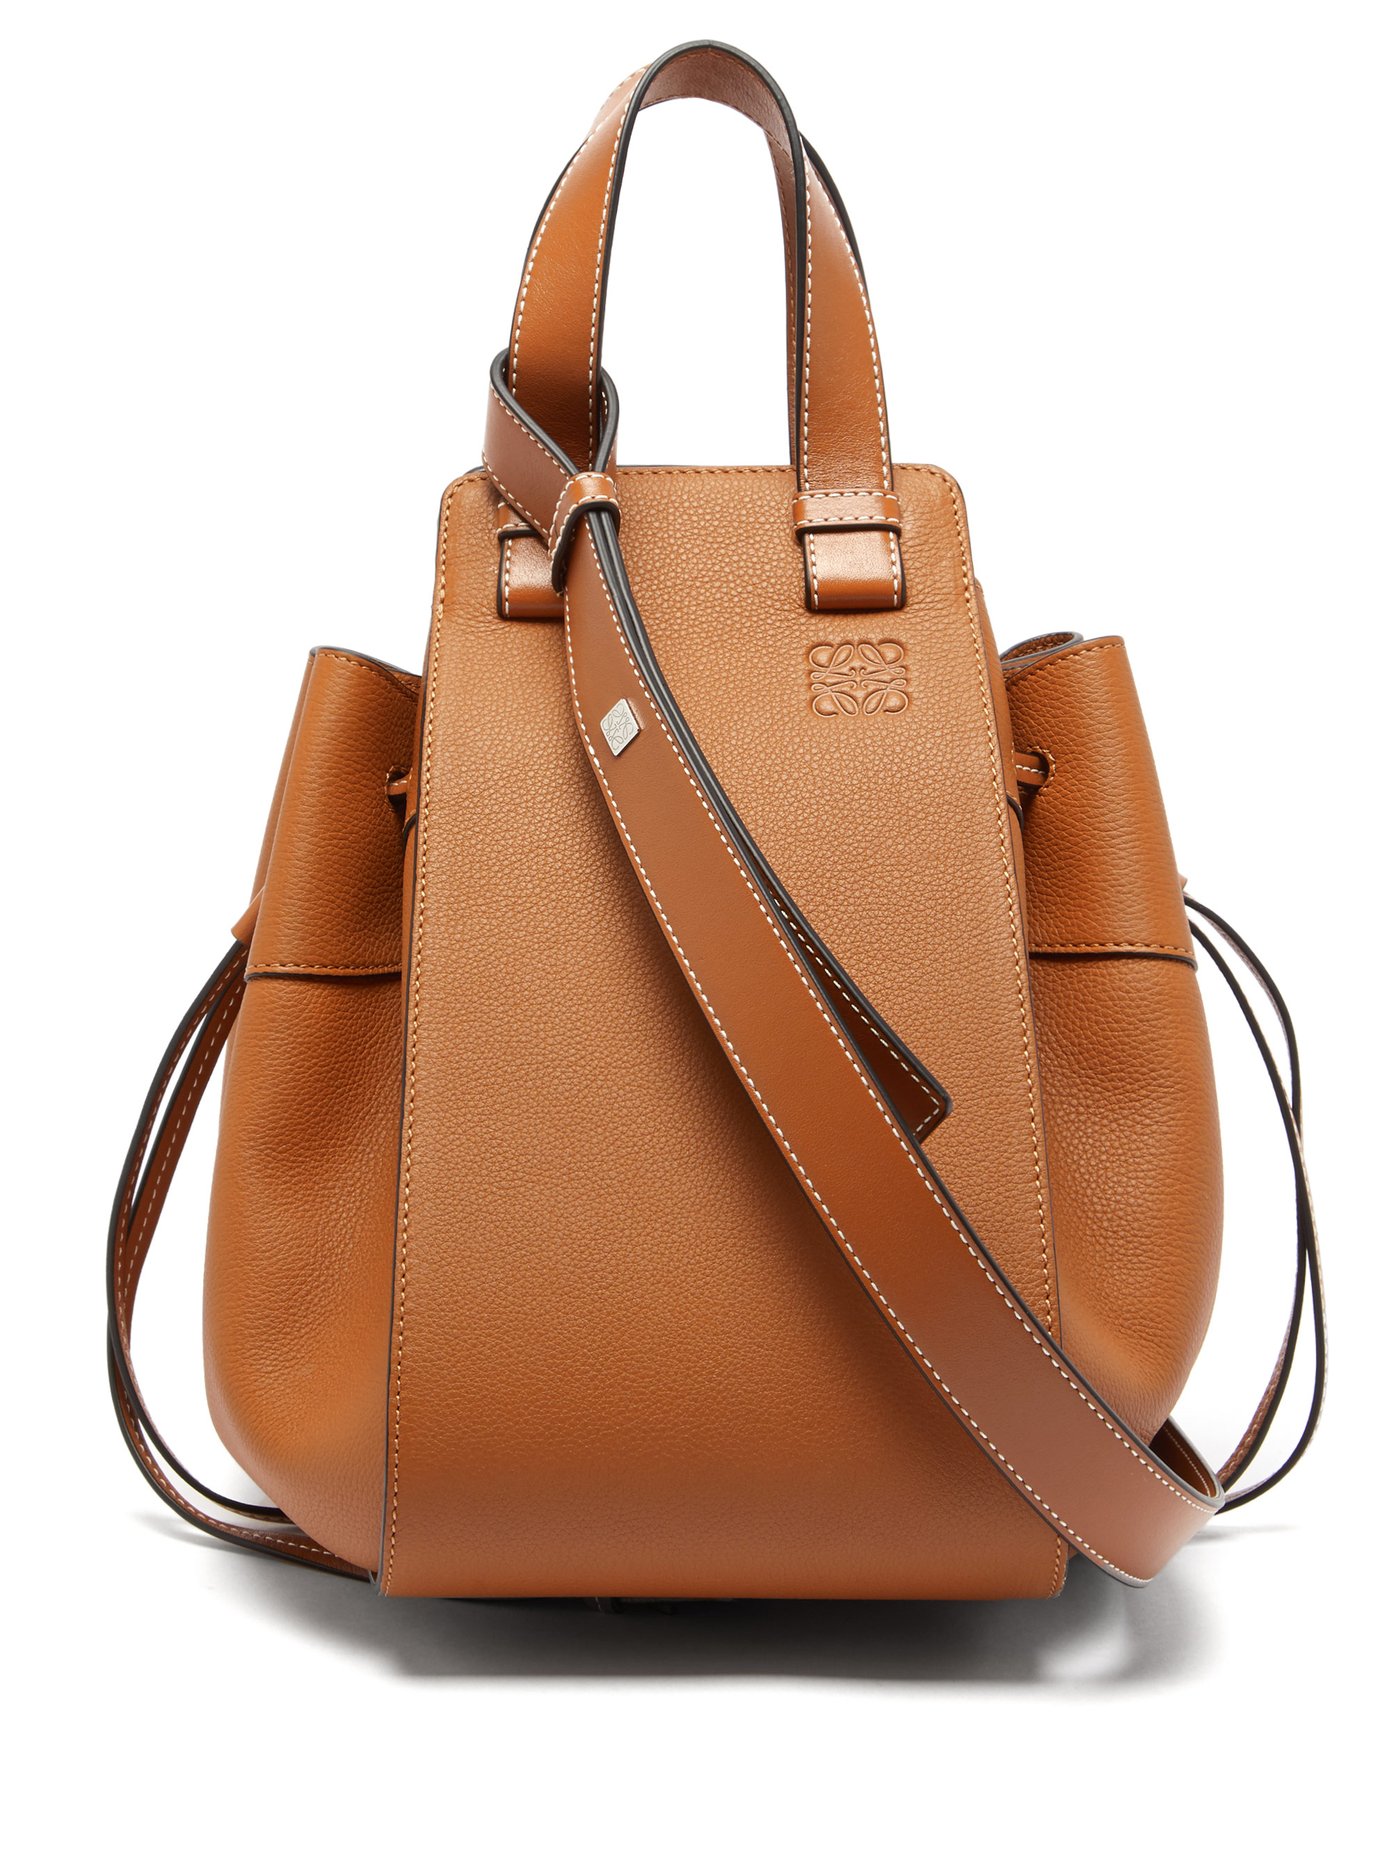 Hammock medium leather tote bag | Loewe 